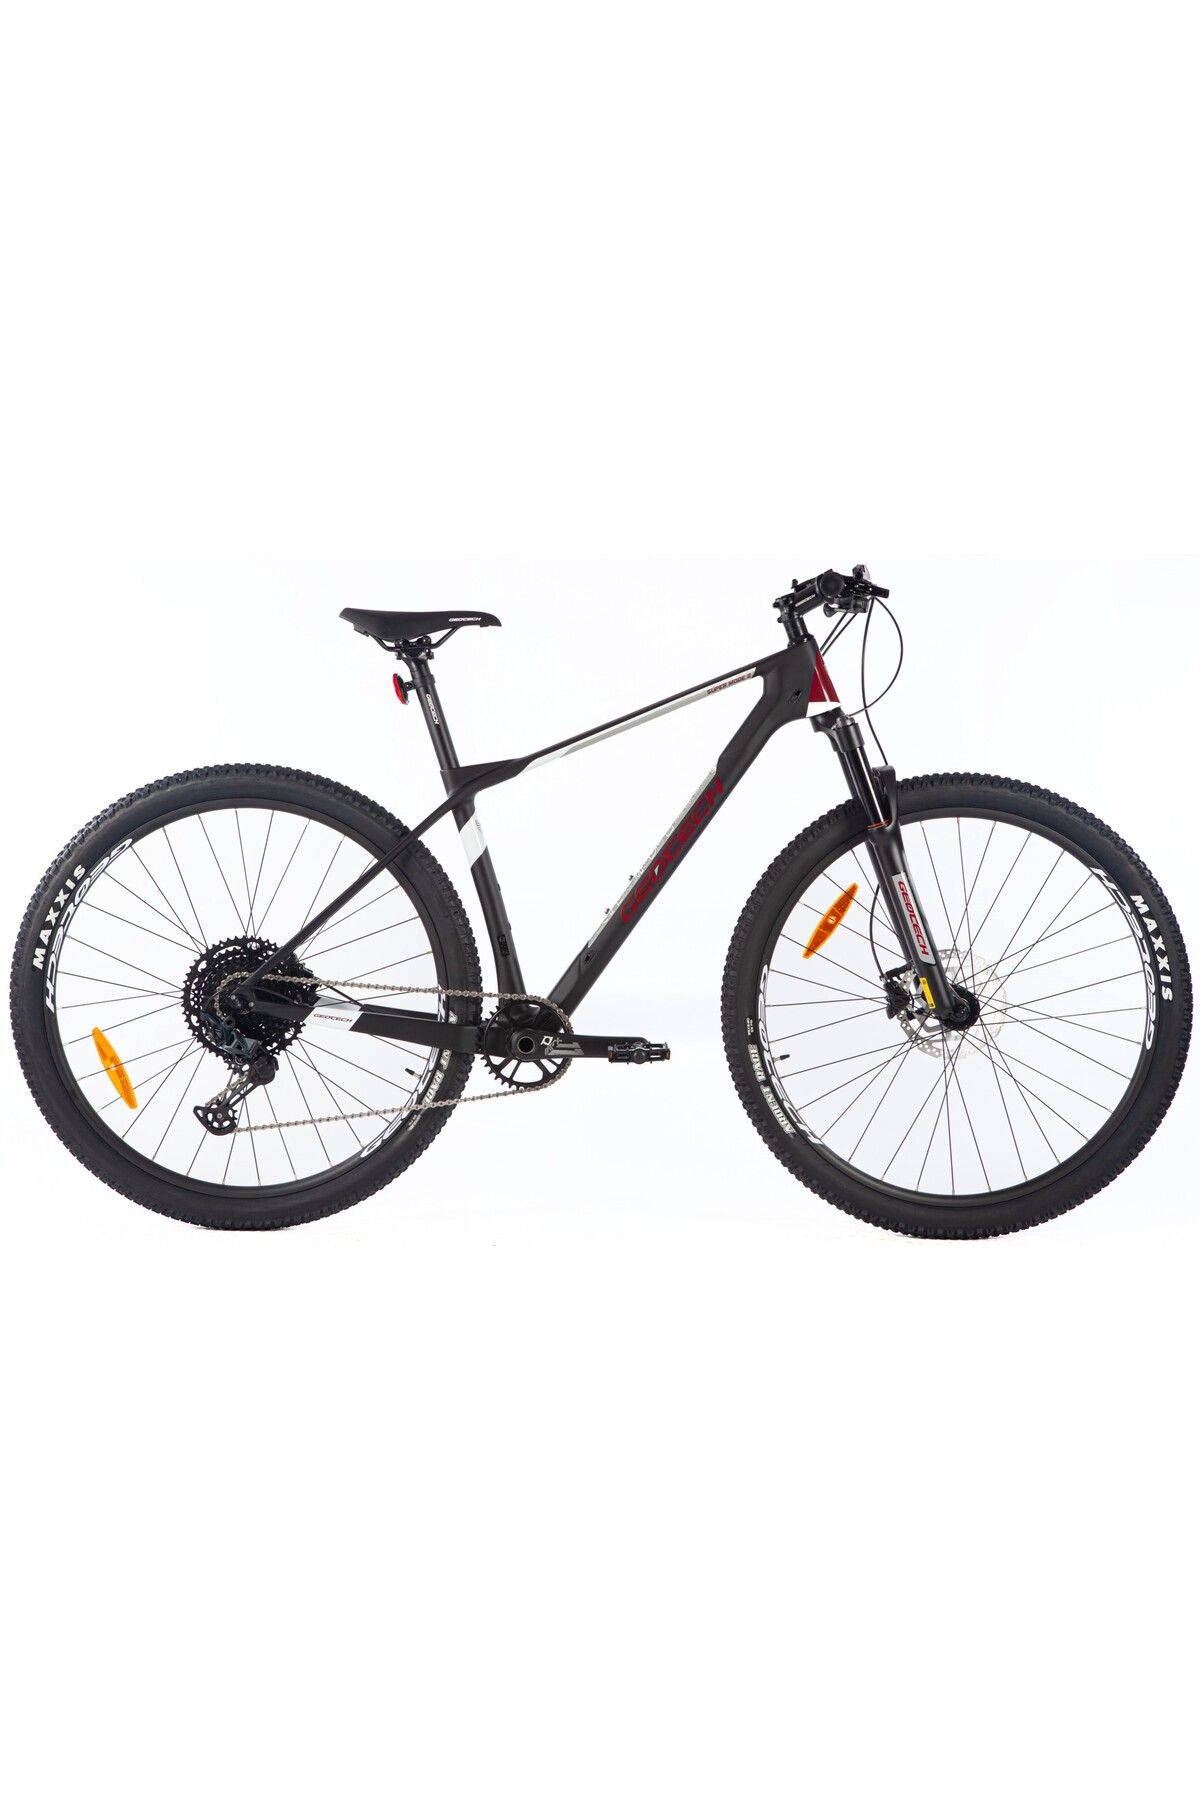 Geotech Super Mode 2 29 Jant Karbon Dağ Bisikleti - Mat Siyah Kırmızı